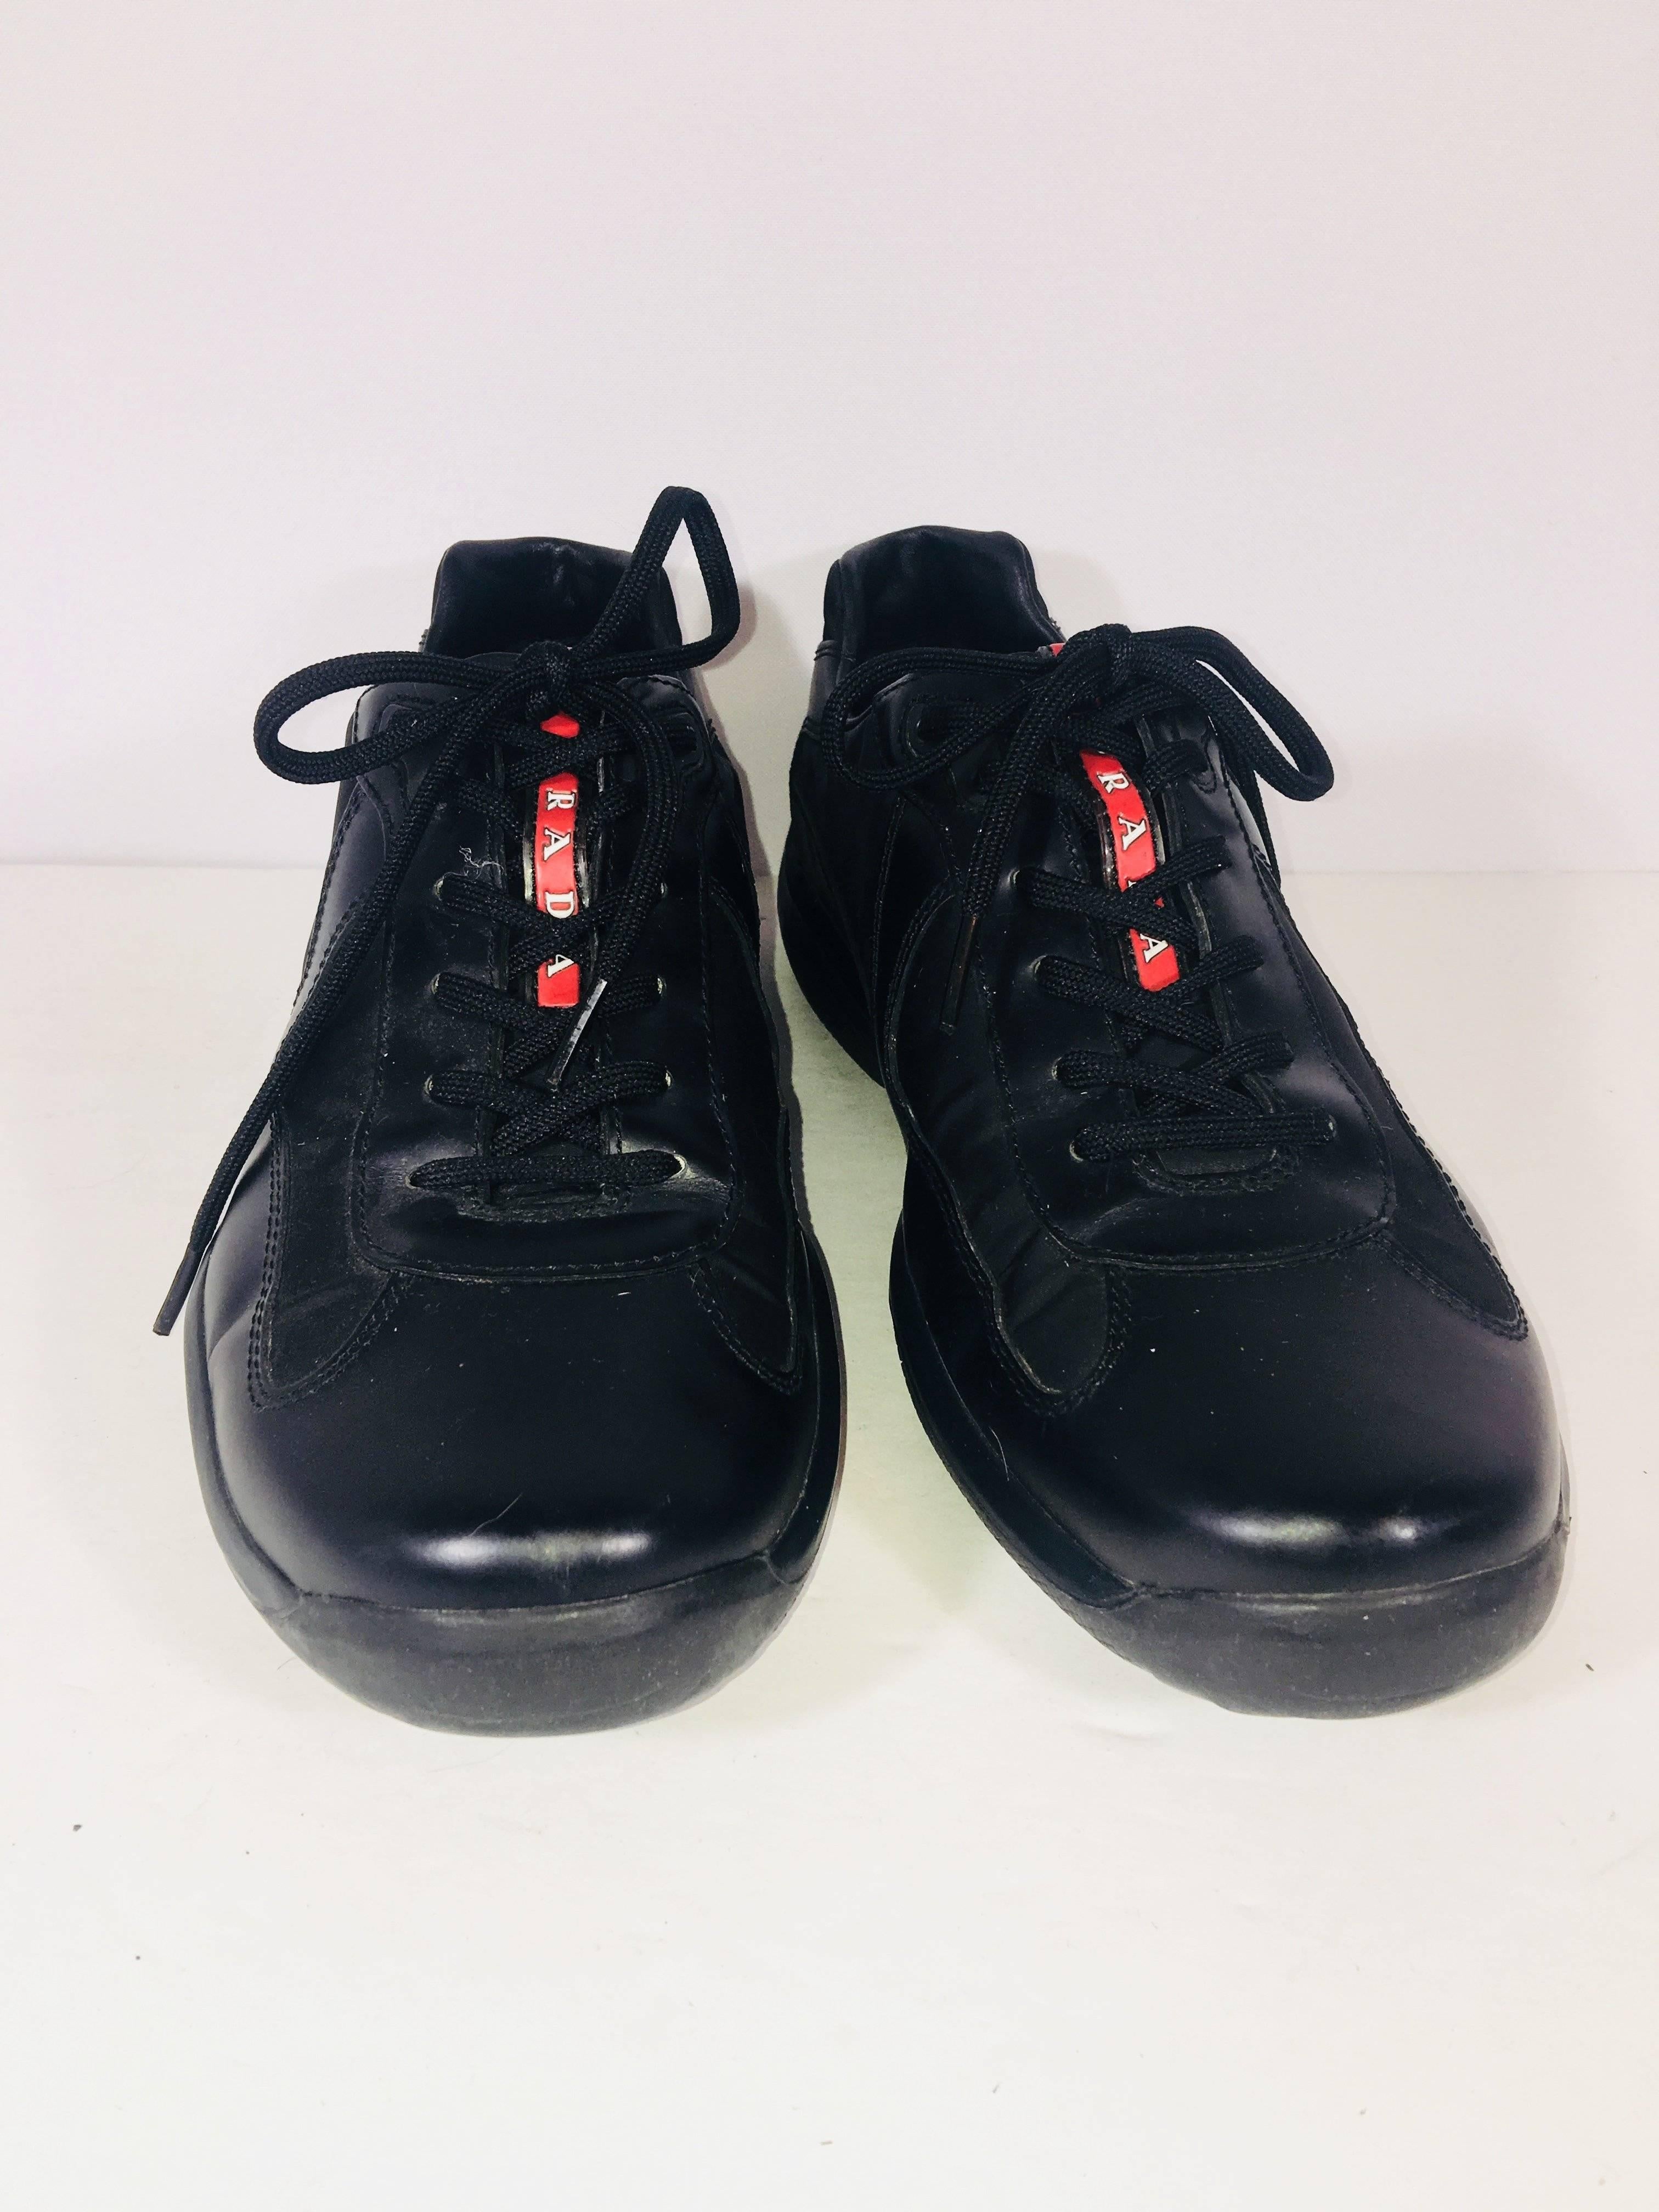 Men's Prada American Cup Low-Top Sneakers in Black Leather with Black Panels